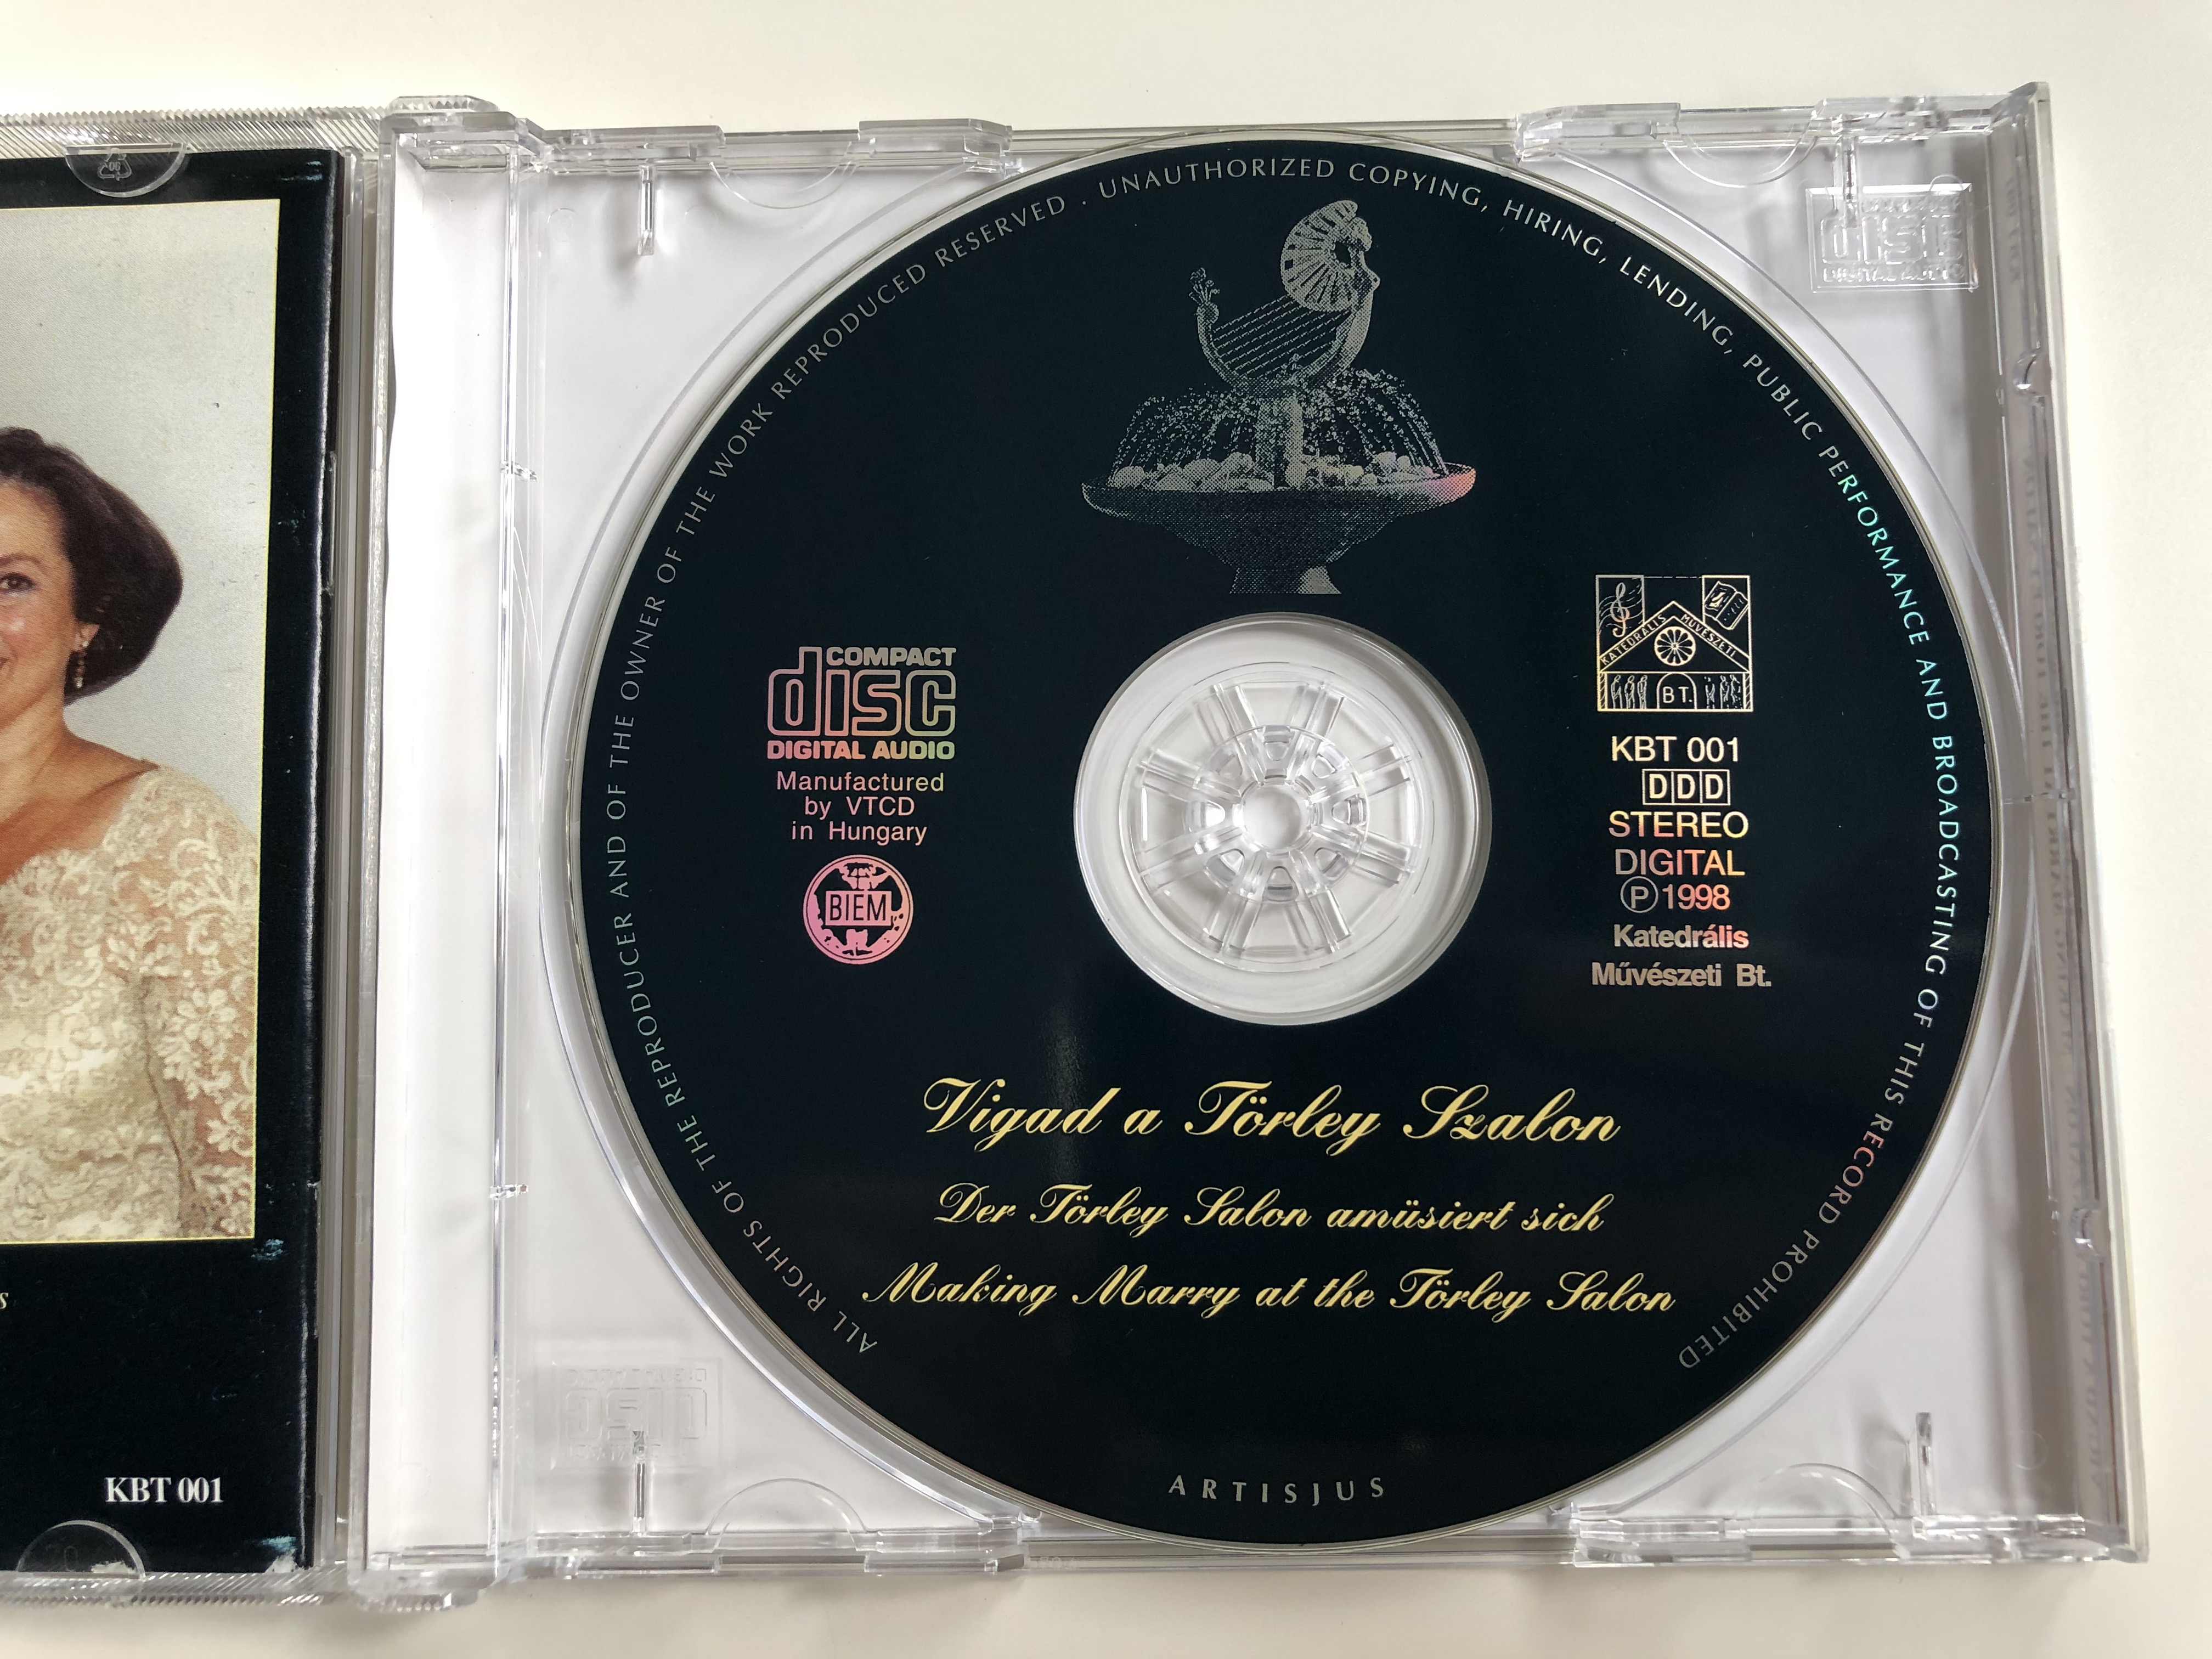 vigad-a-torley-szalon-making-marry-at-the-der-torley-szalon-amusiert-sich-katedralis-muveszeti-bt.-audio-cd-1998-stereo-kbt-001-15-.jpg